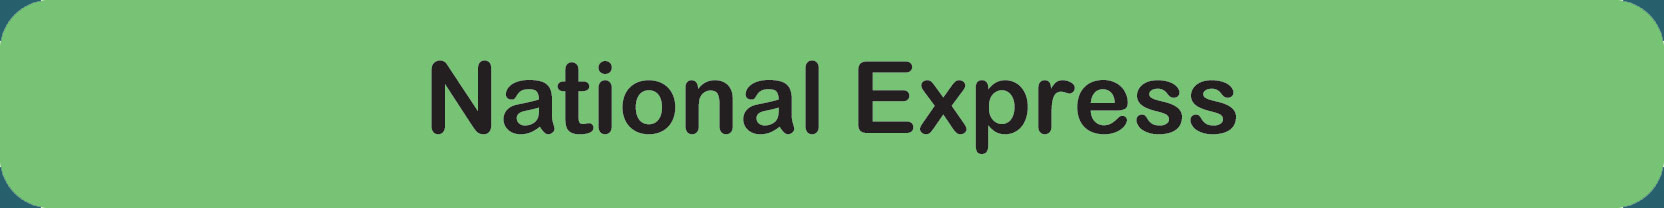 national express link